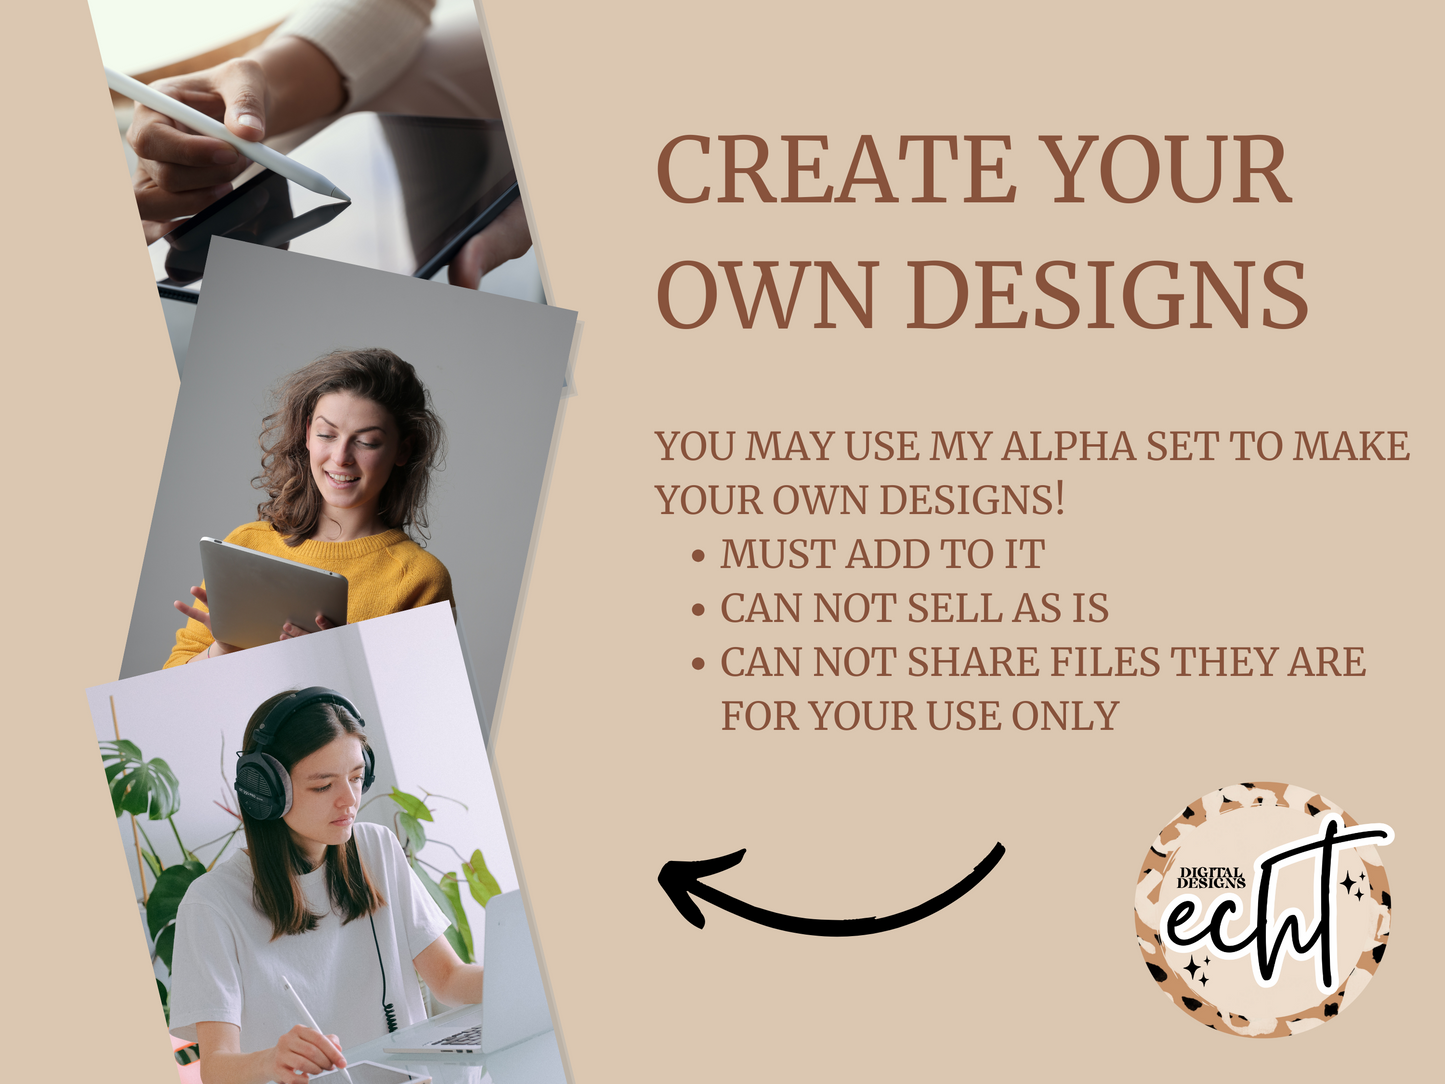 Leopard Faux Embroidery Alpha Set- Design Element- Digital Download